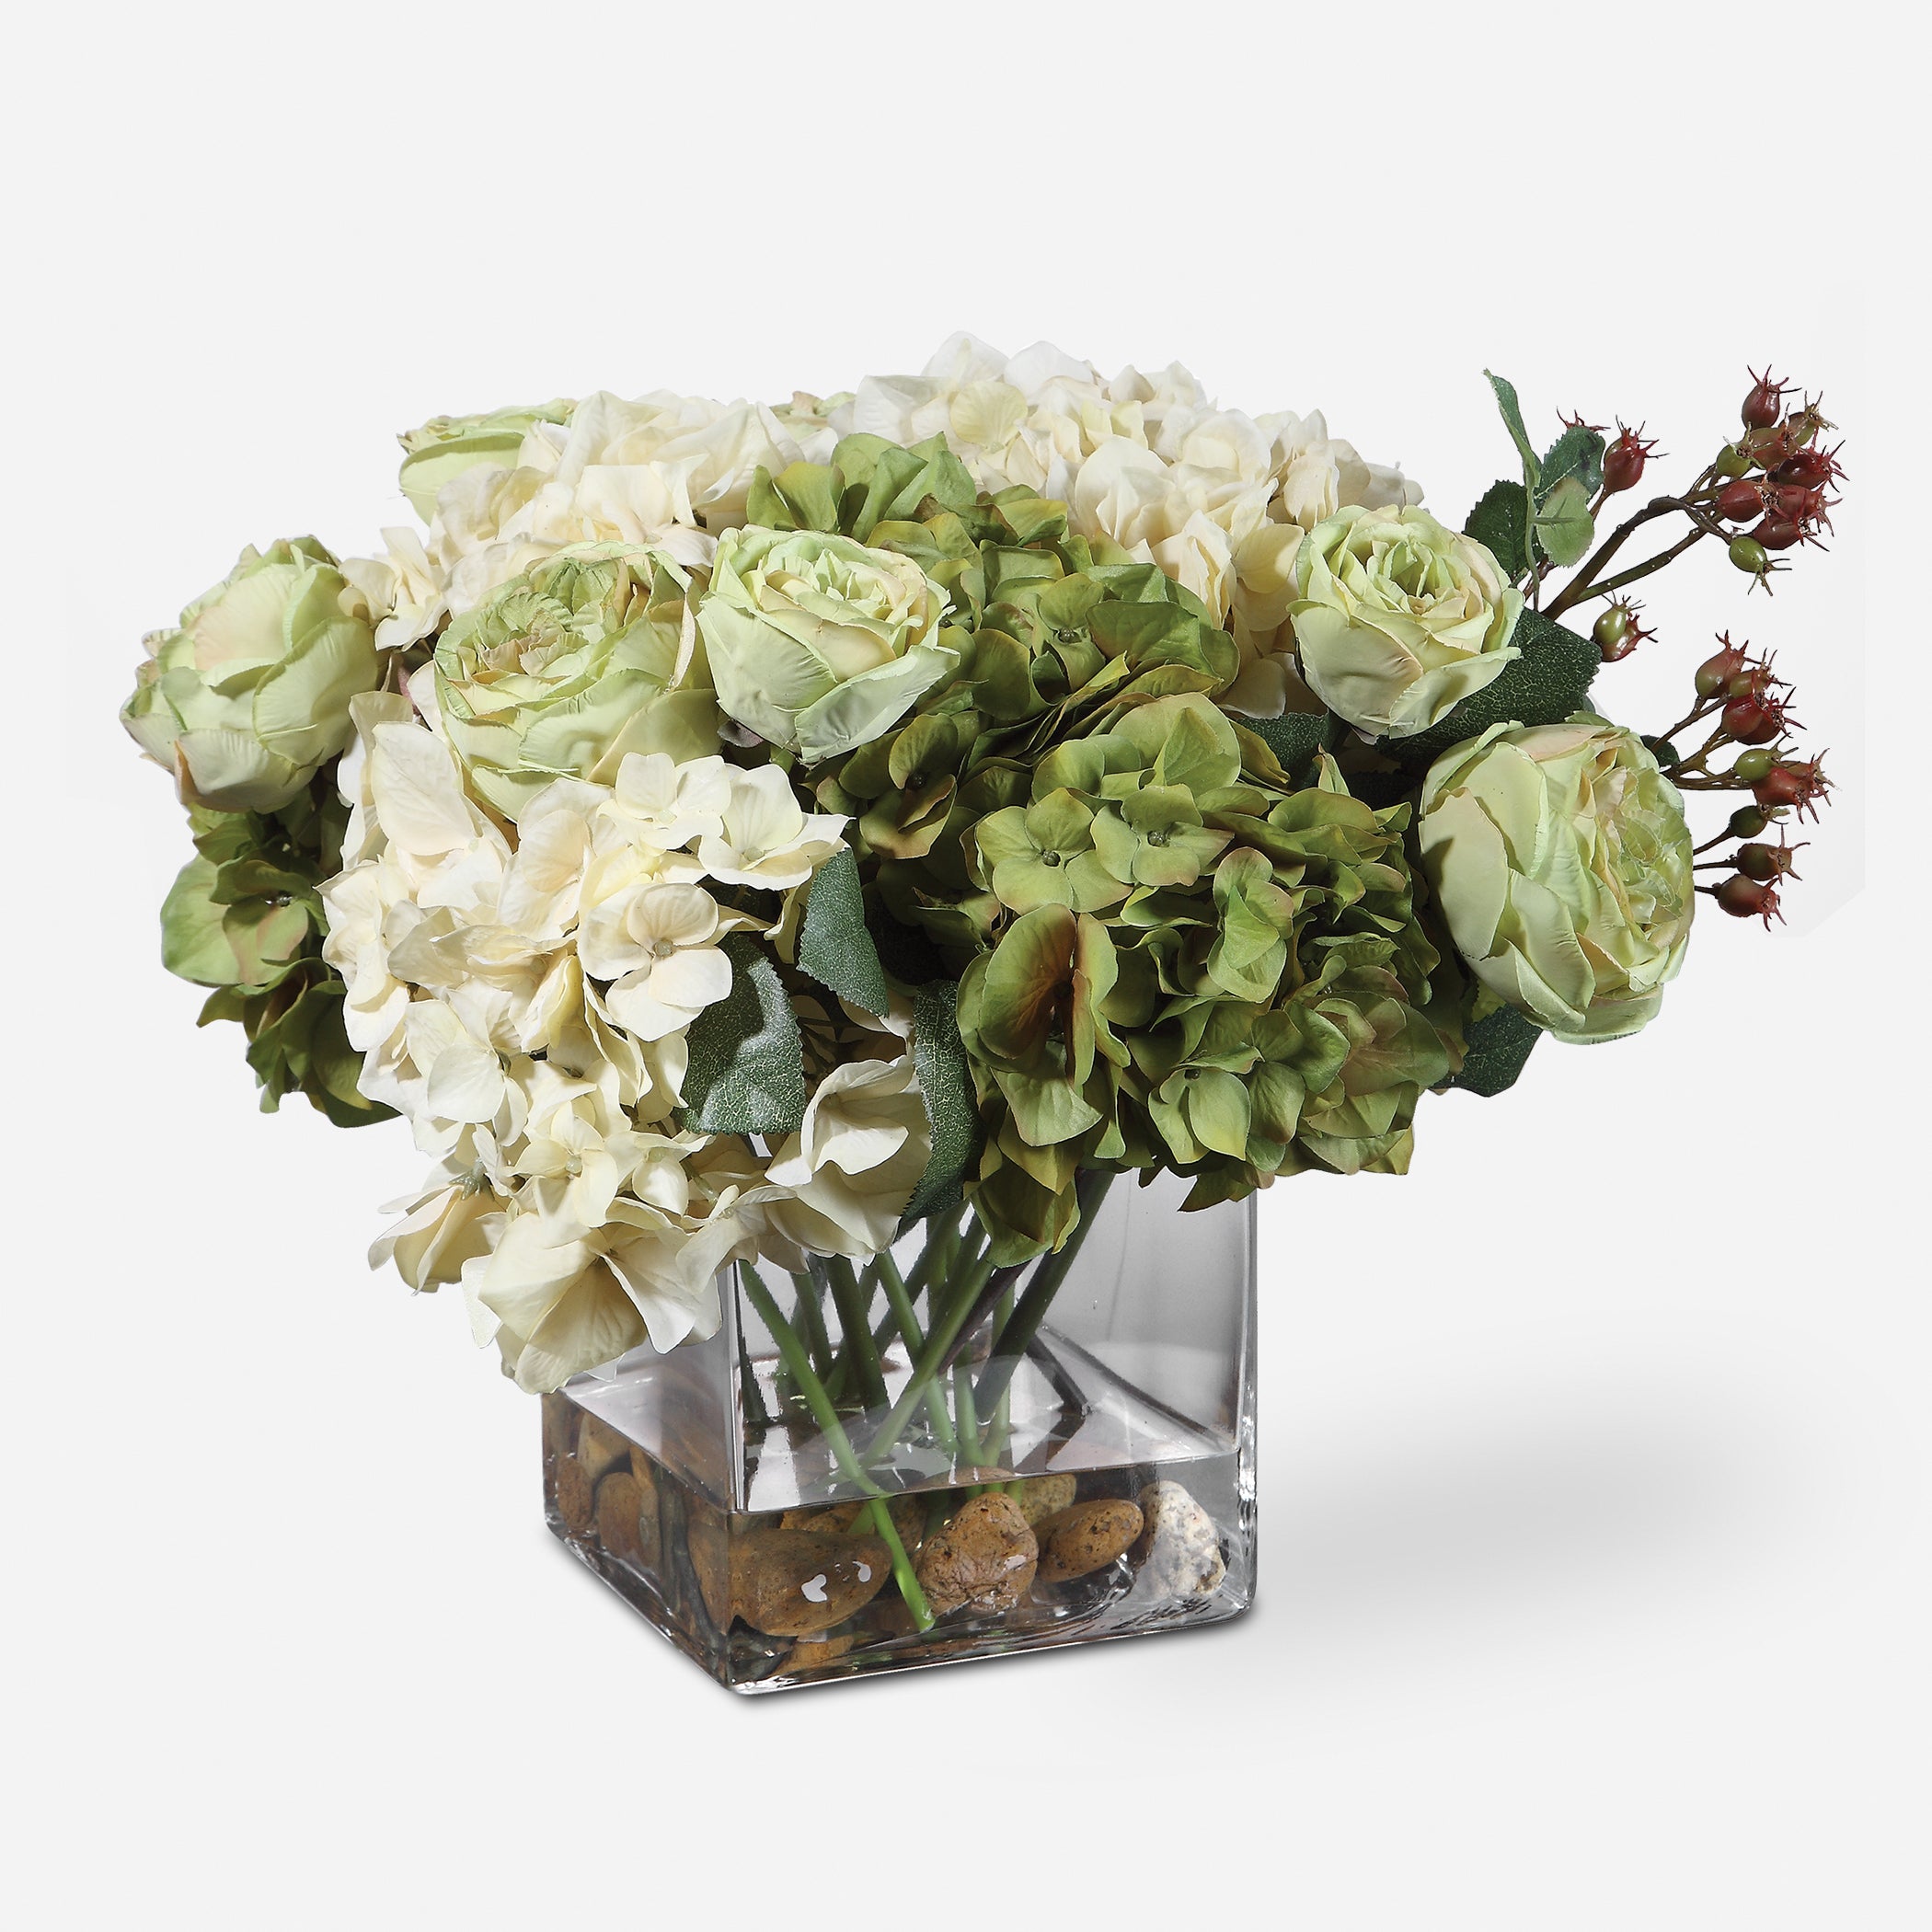 Uttermost Cecily Artificial Flowers / Centerpiece